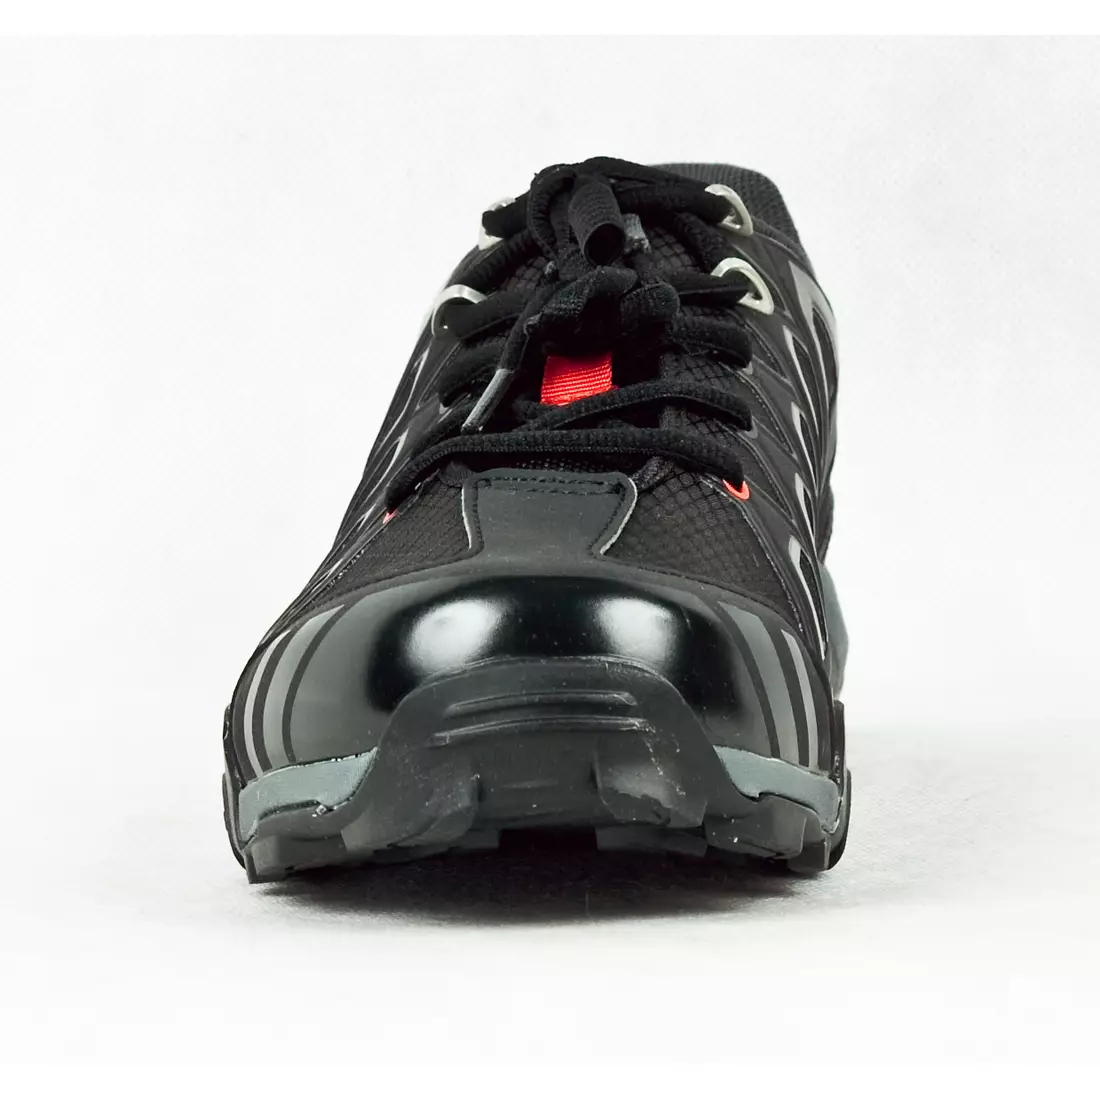 SHIMANO SH-MT34 - pantofi de ciclism, culoare: negru